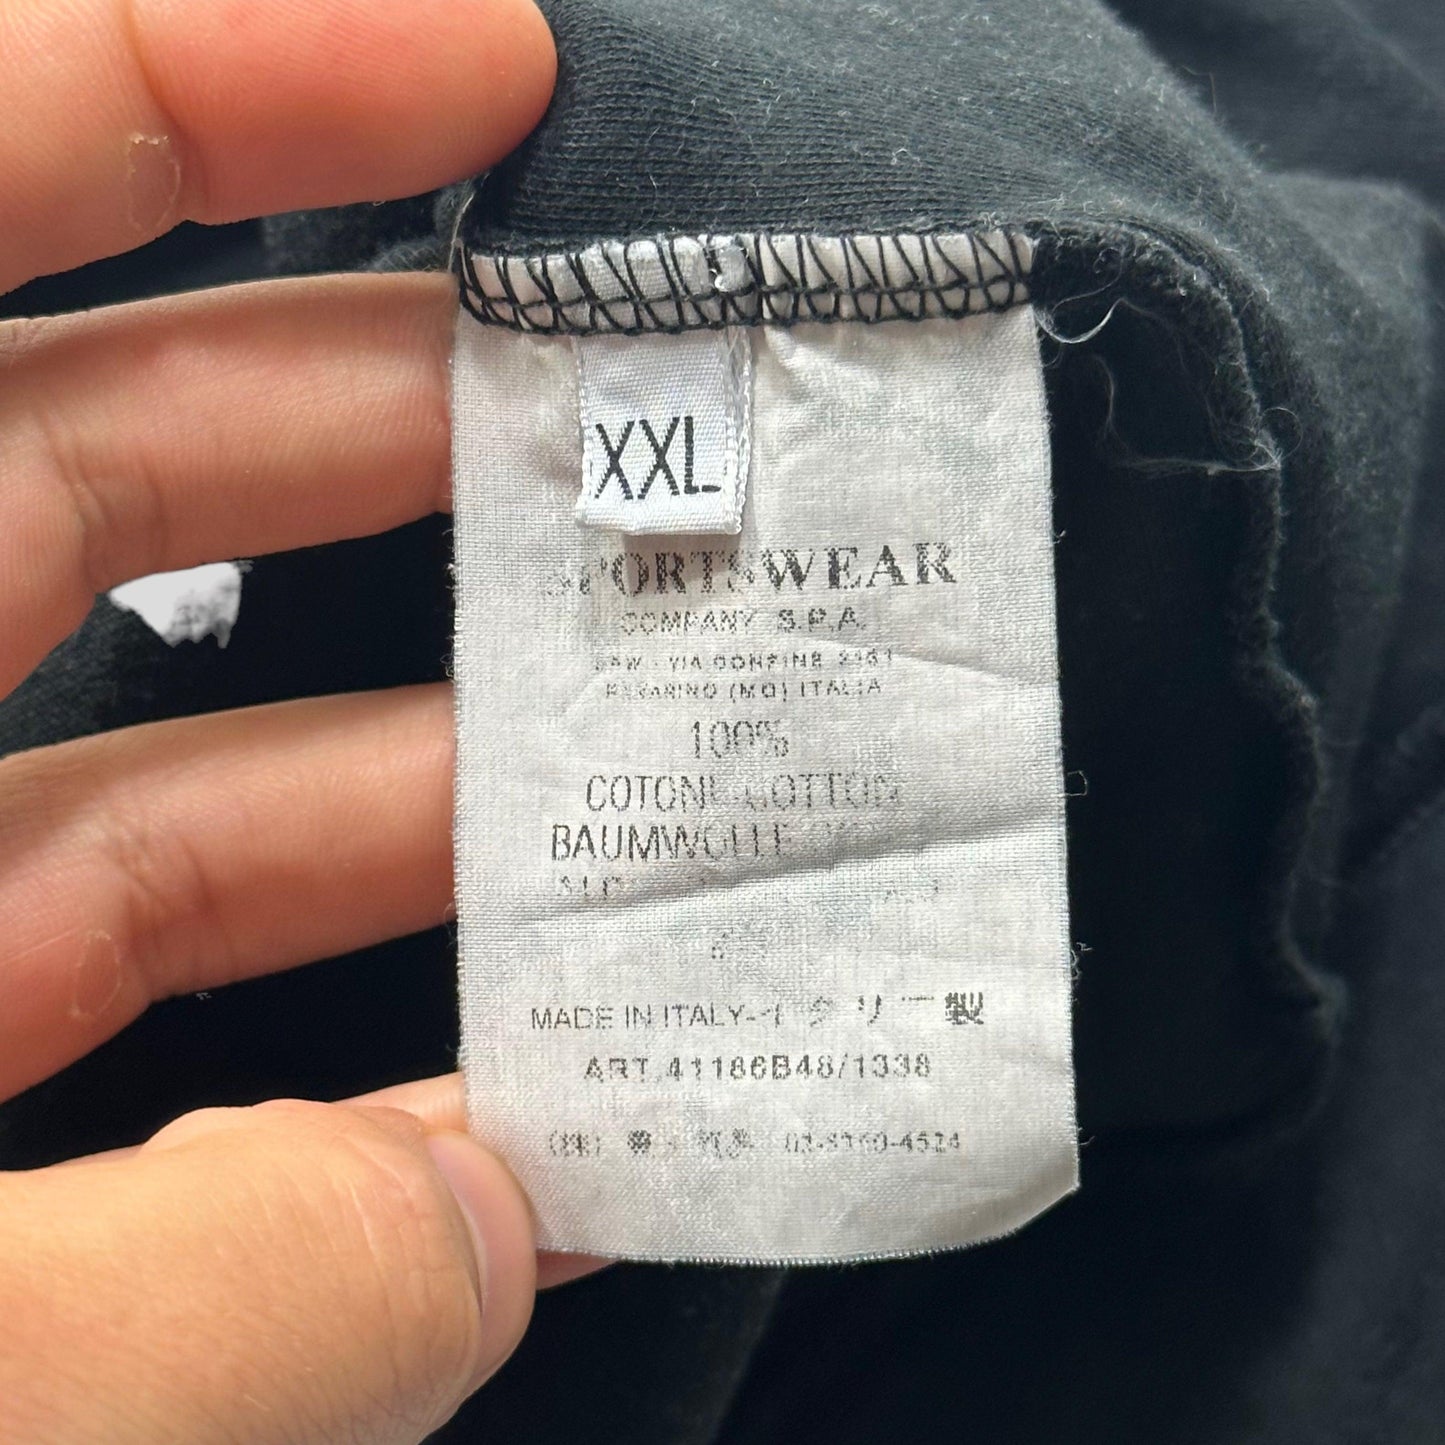 CP Company Cotton Logo Jacket - XL/XXL - Known Source